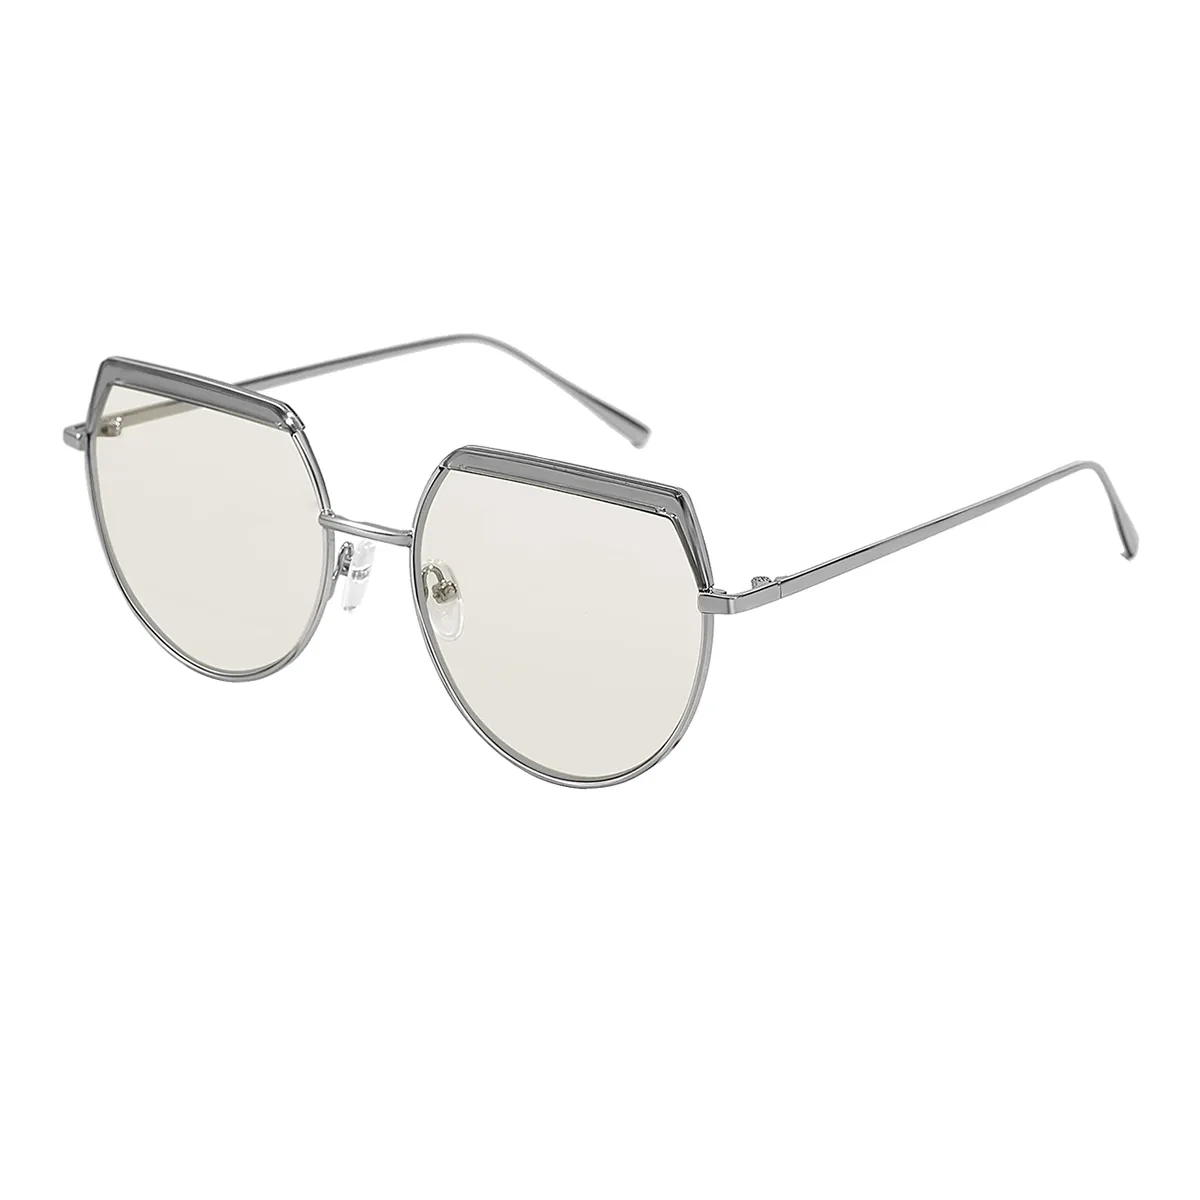 Cleo - Geometric Silver/1 Sunglasses for Women